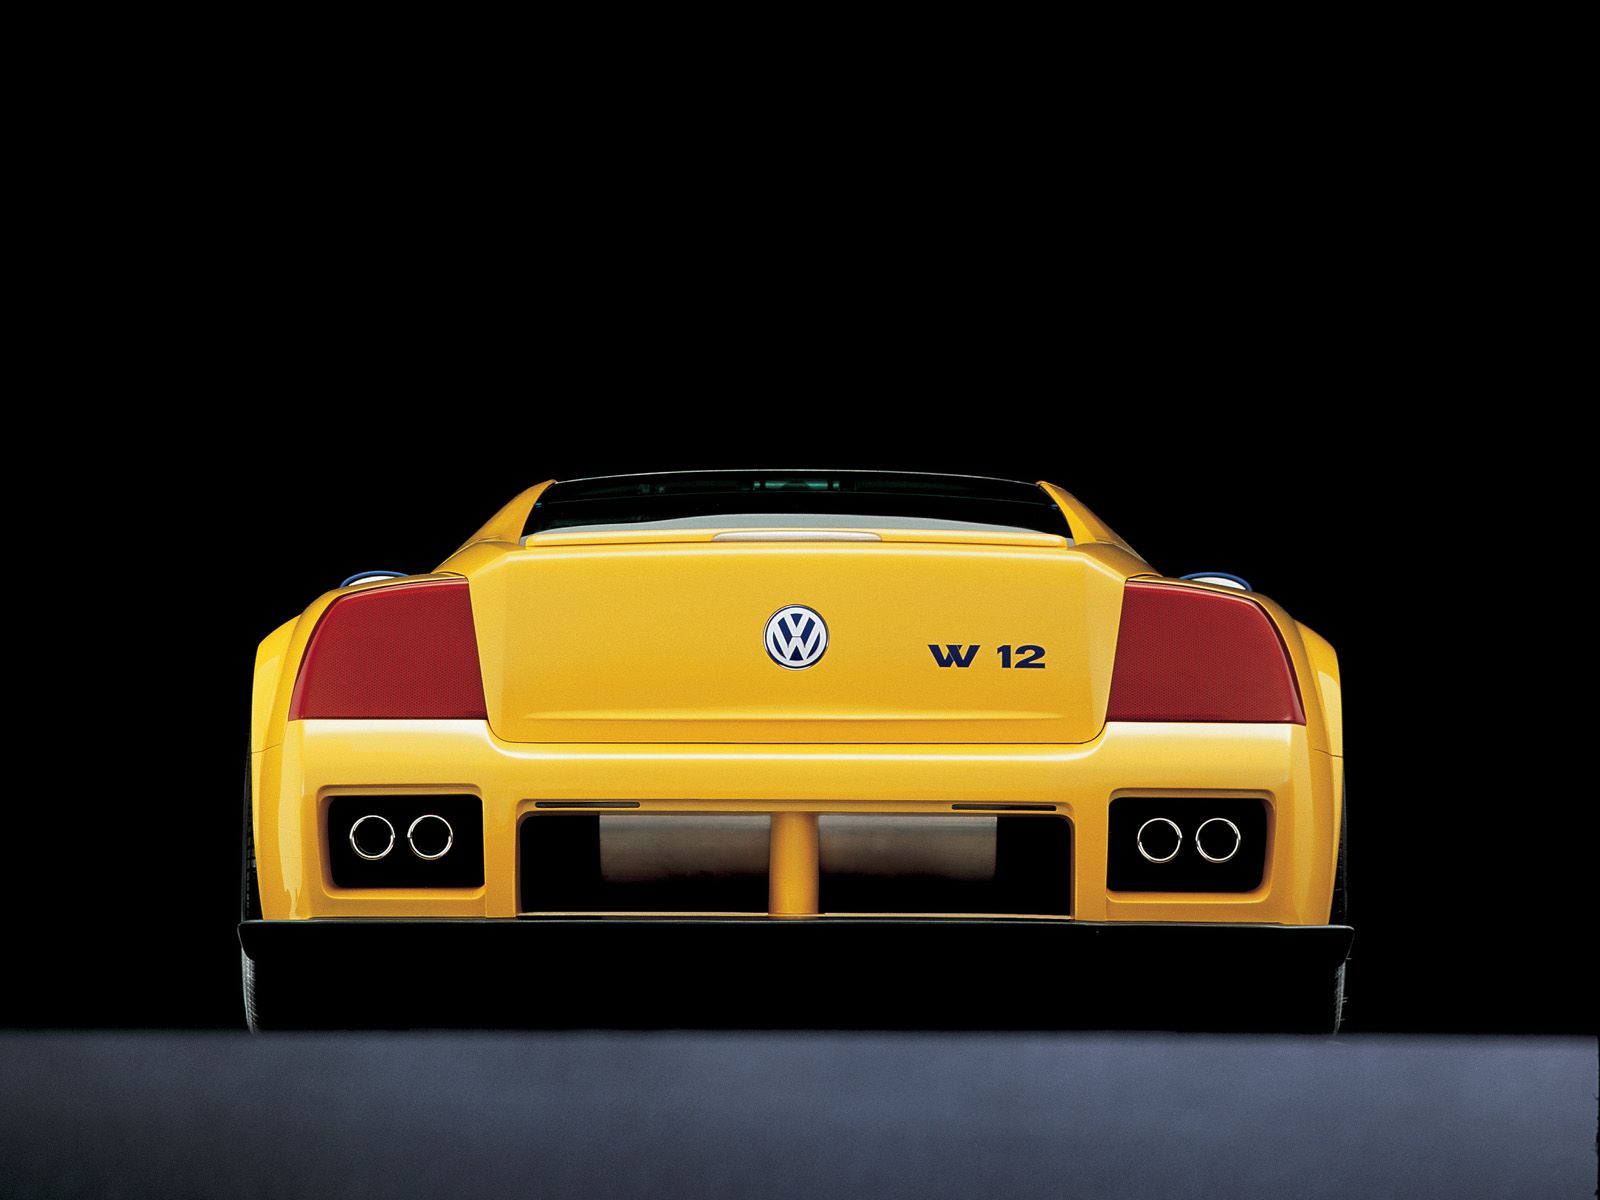 1997 Volkswagen W12 Syncro Concept